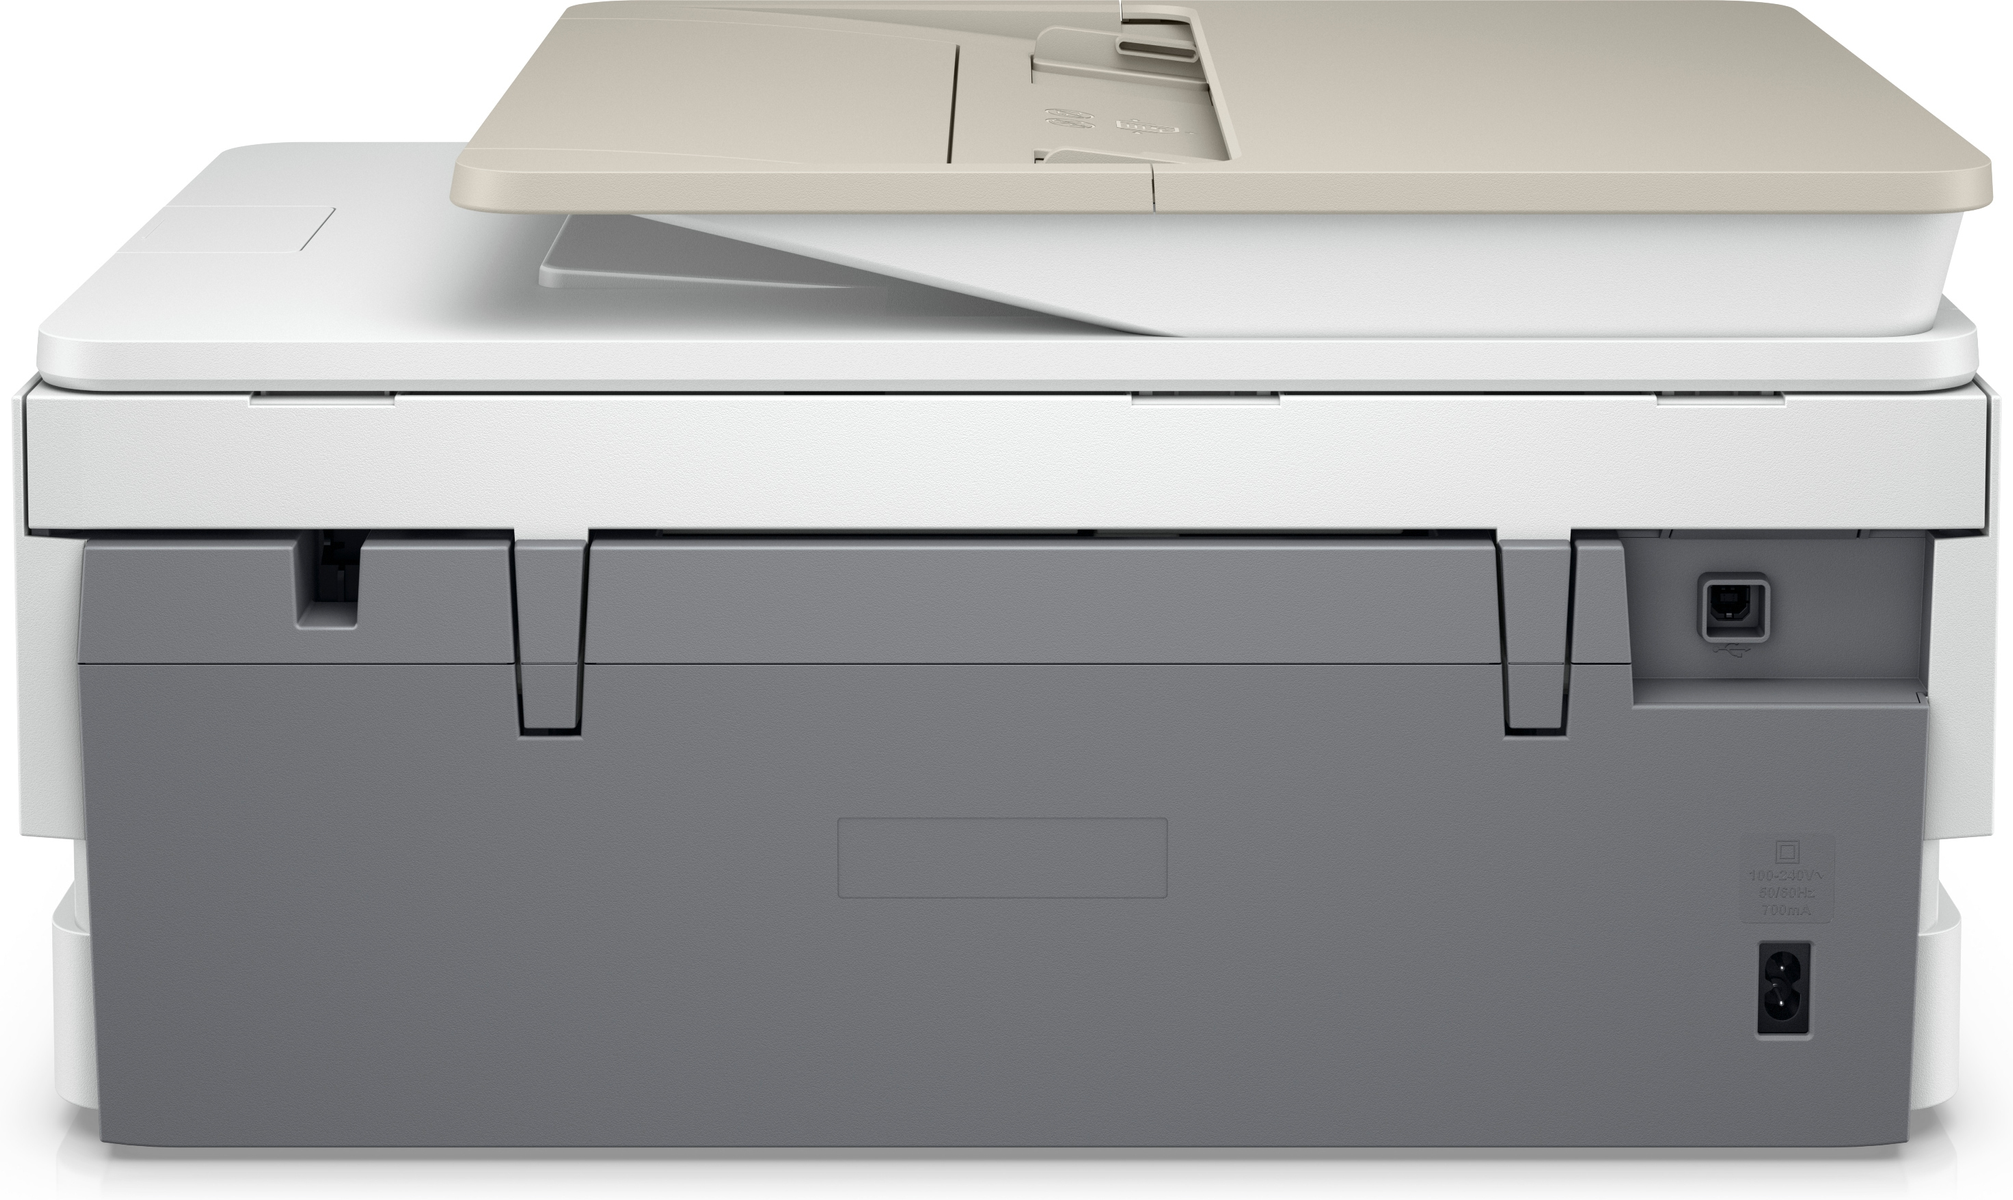 Thermal HP AIL-IN-ONE Inkjet PRINTER INSPIRE WLAN 7920E Multifunktionsdrucker ENVY